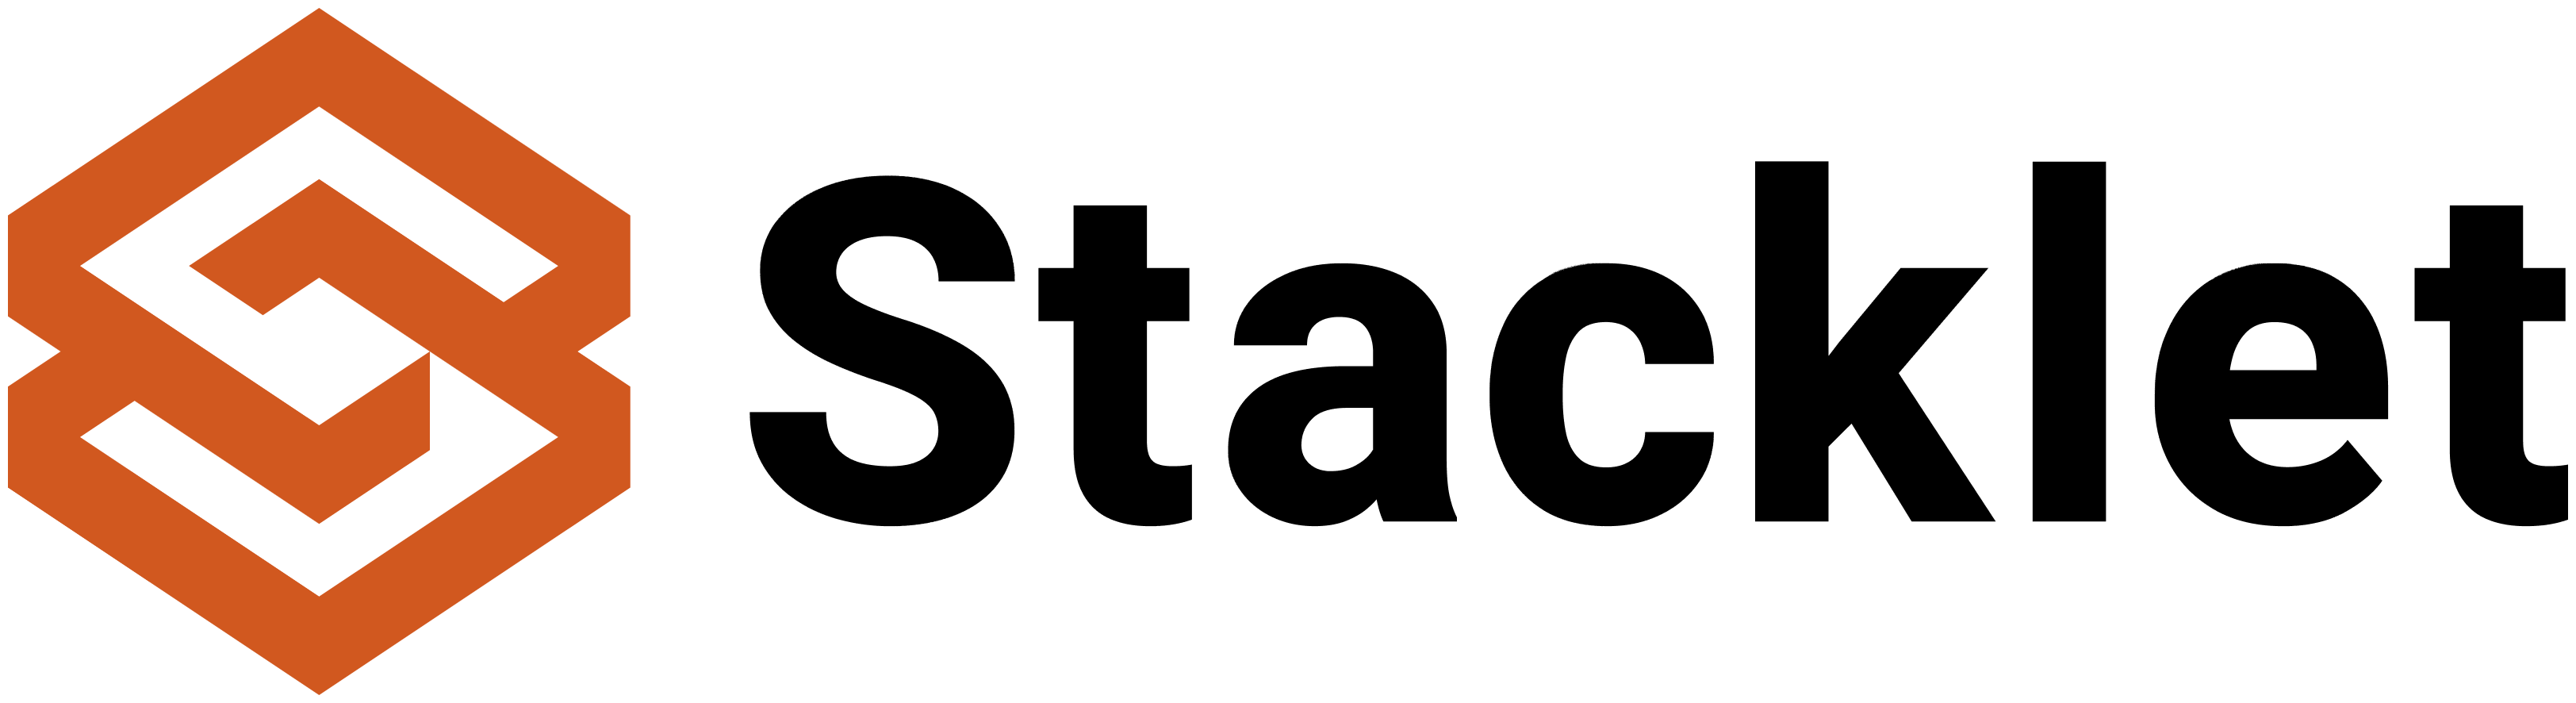 Logo Horizontal - Color 1@2x-2